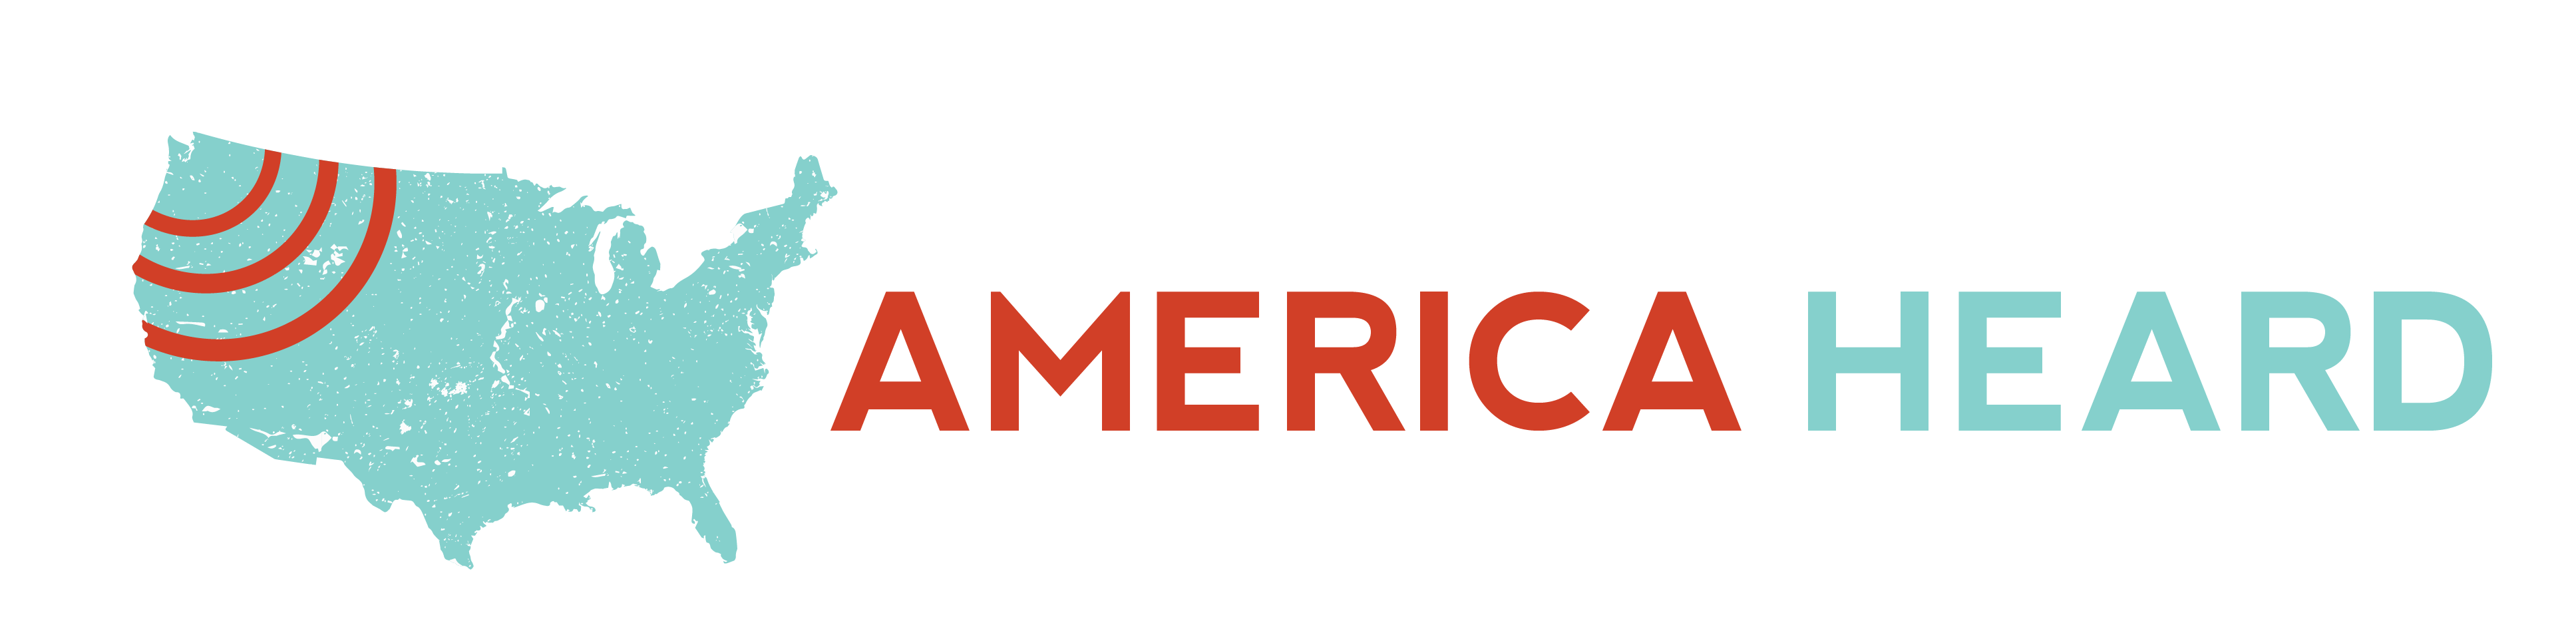 America Heard logo